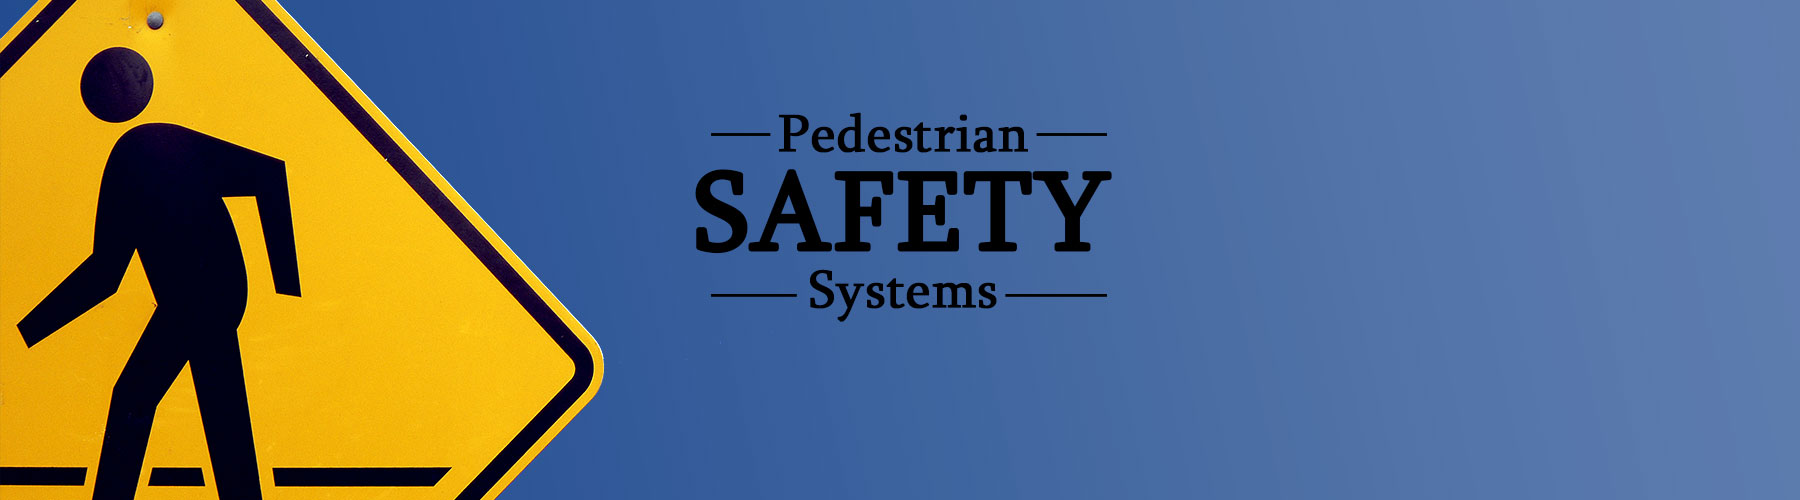 pedestrian-safety-systems